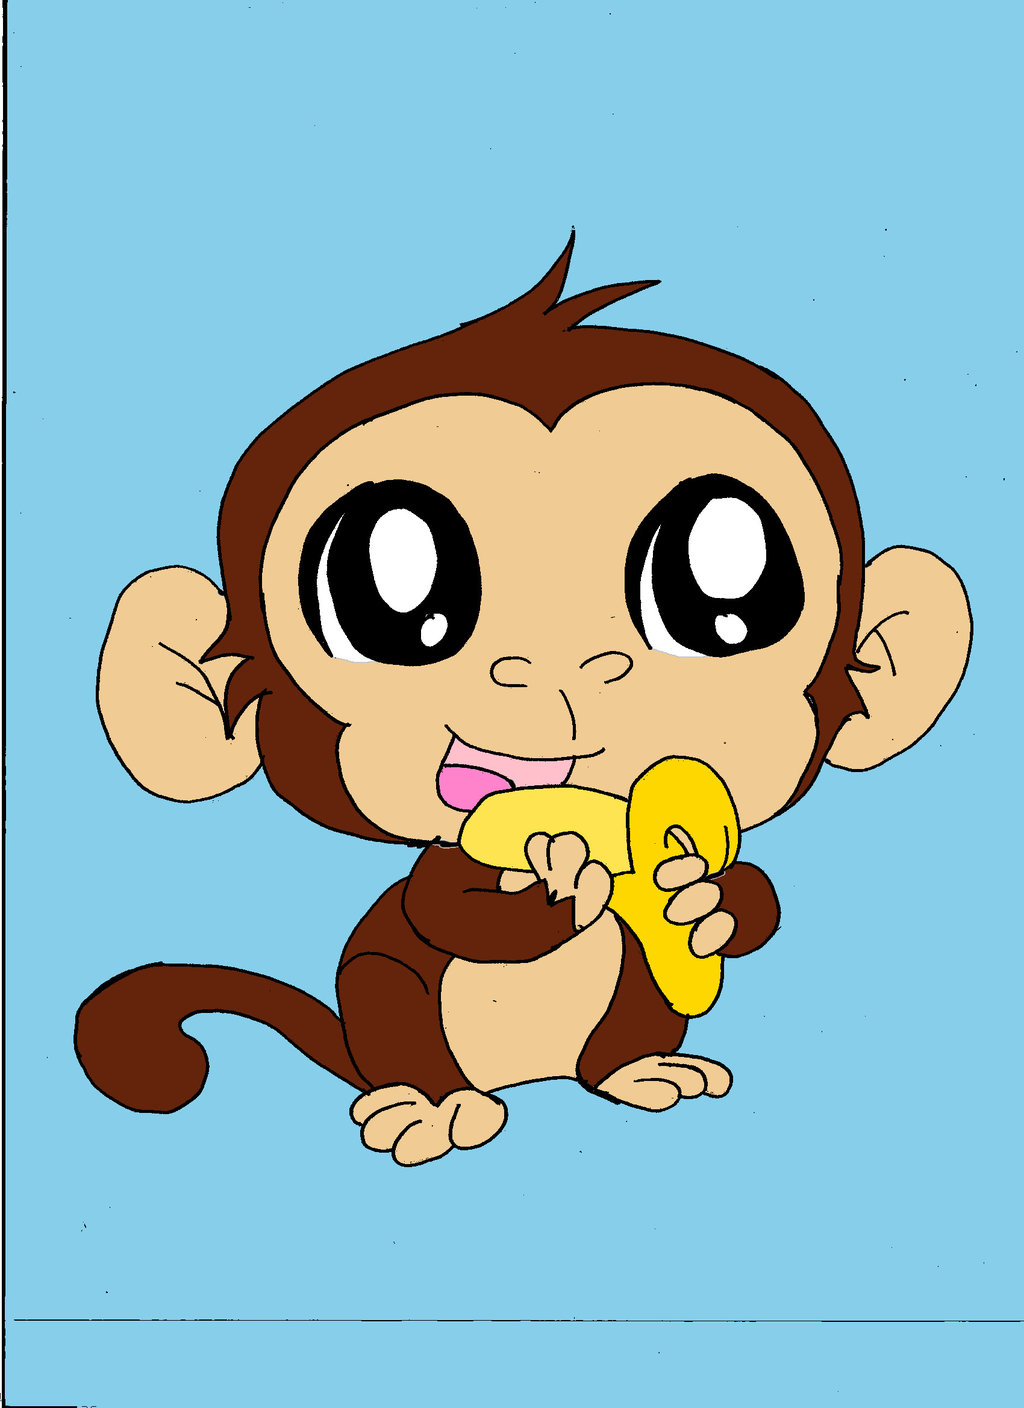 Free Cute Monkey Drawing, Download Free Clip Art, Free ...